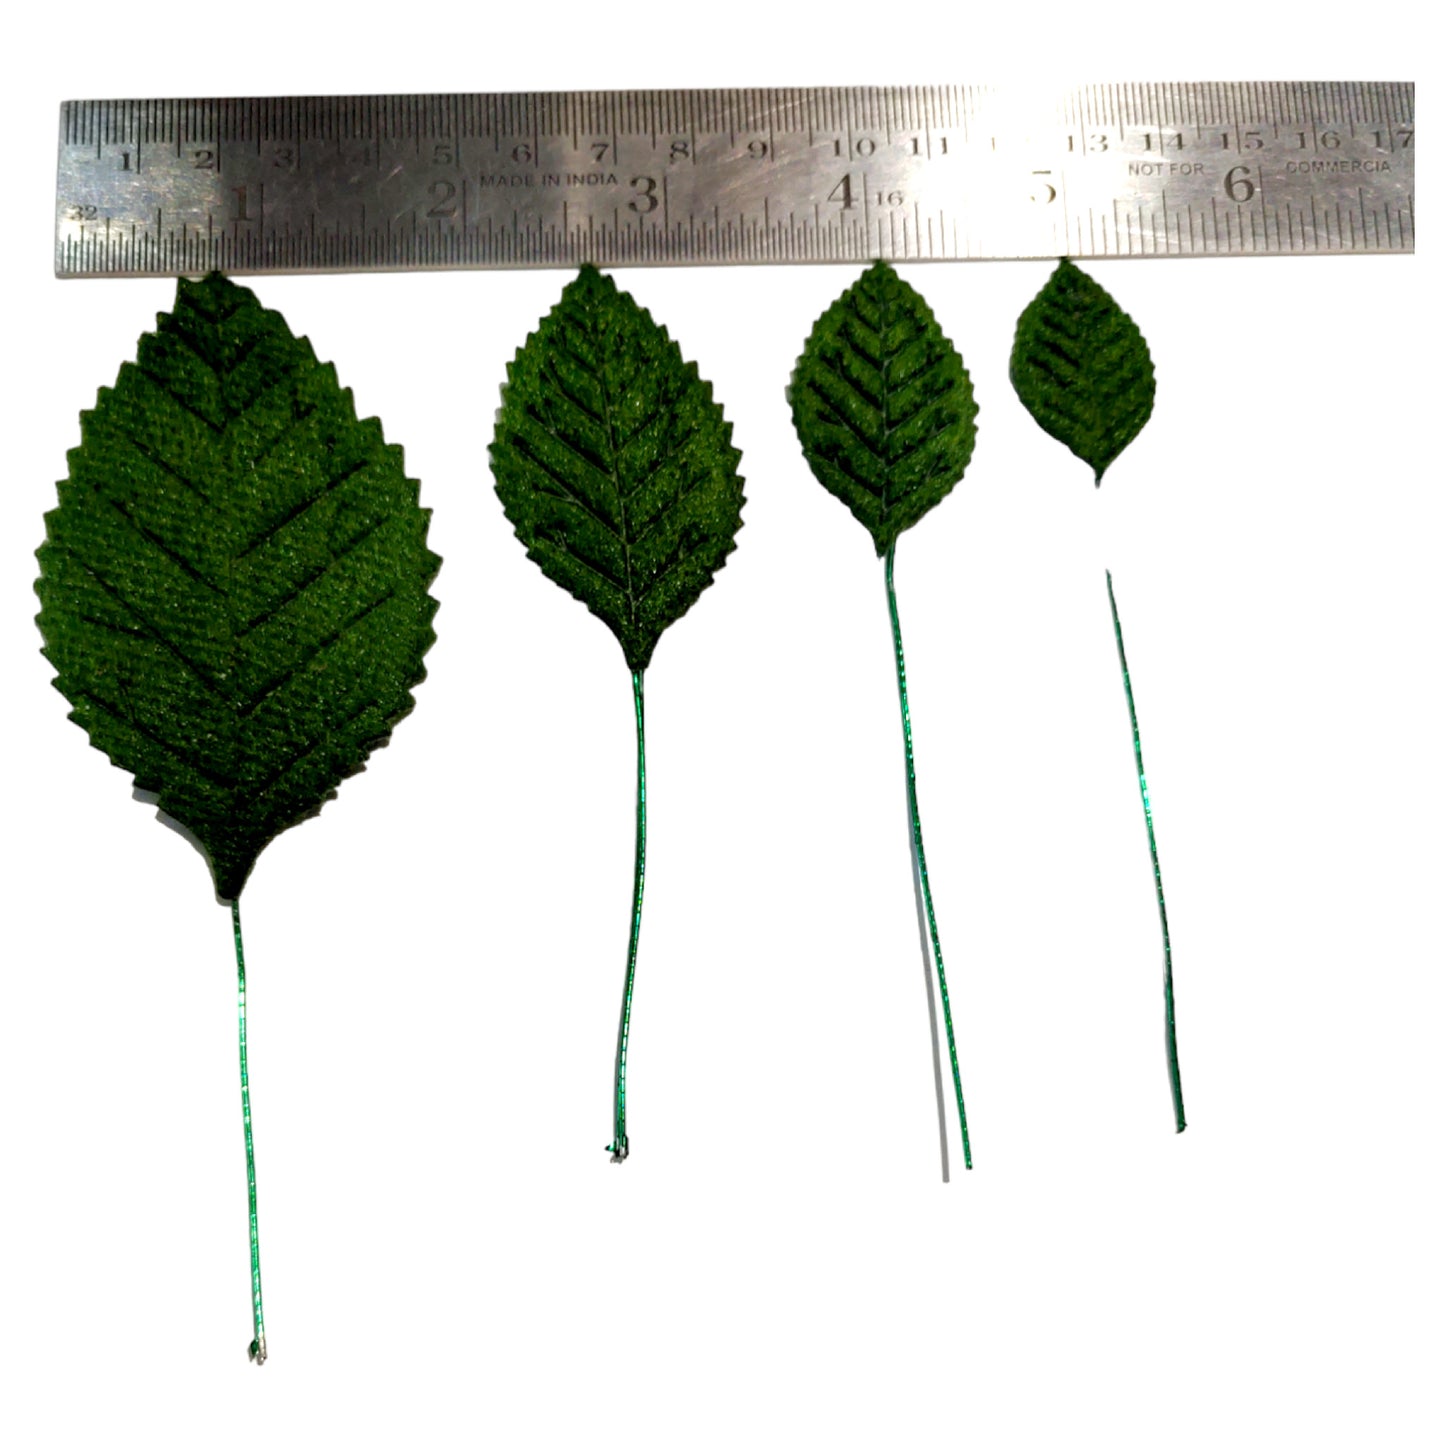 Indian Petals Decorative Artificial Fabric Leaf for Decor, Craft or Textile